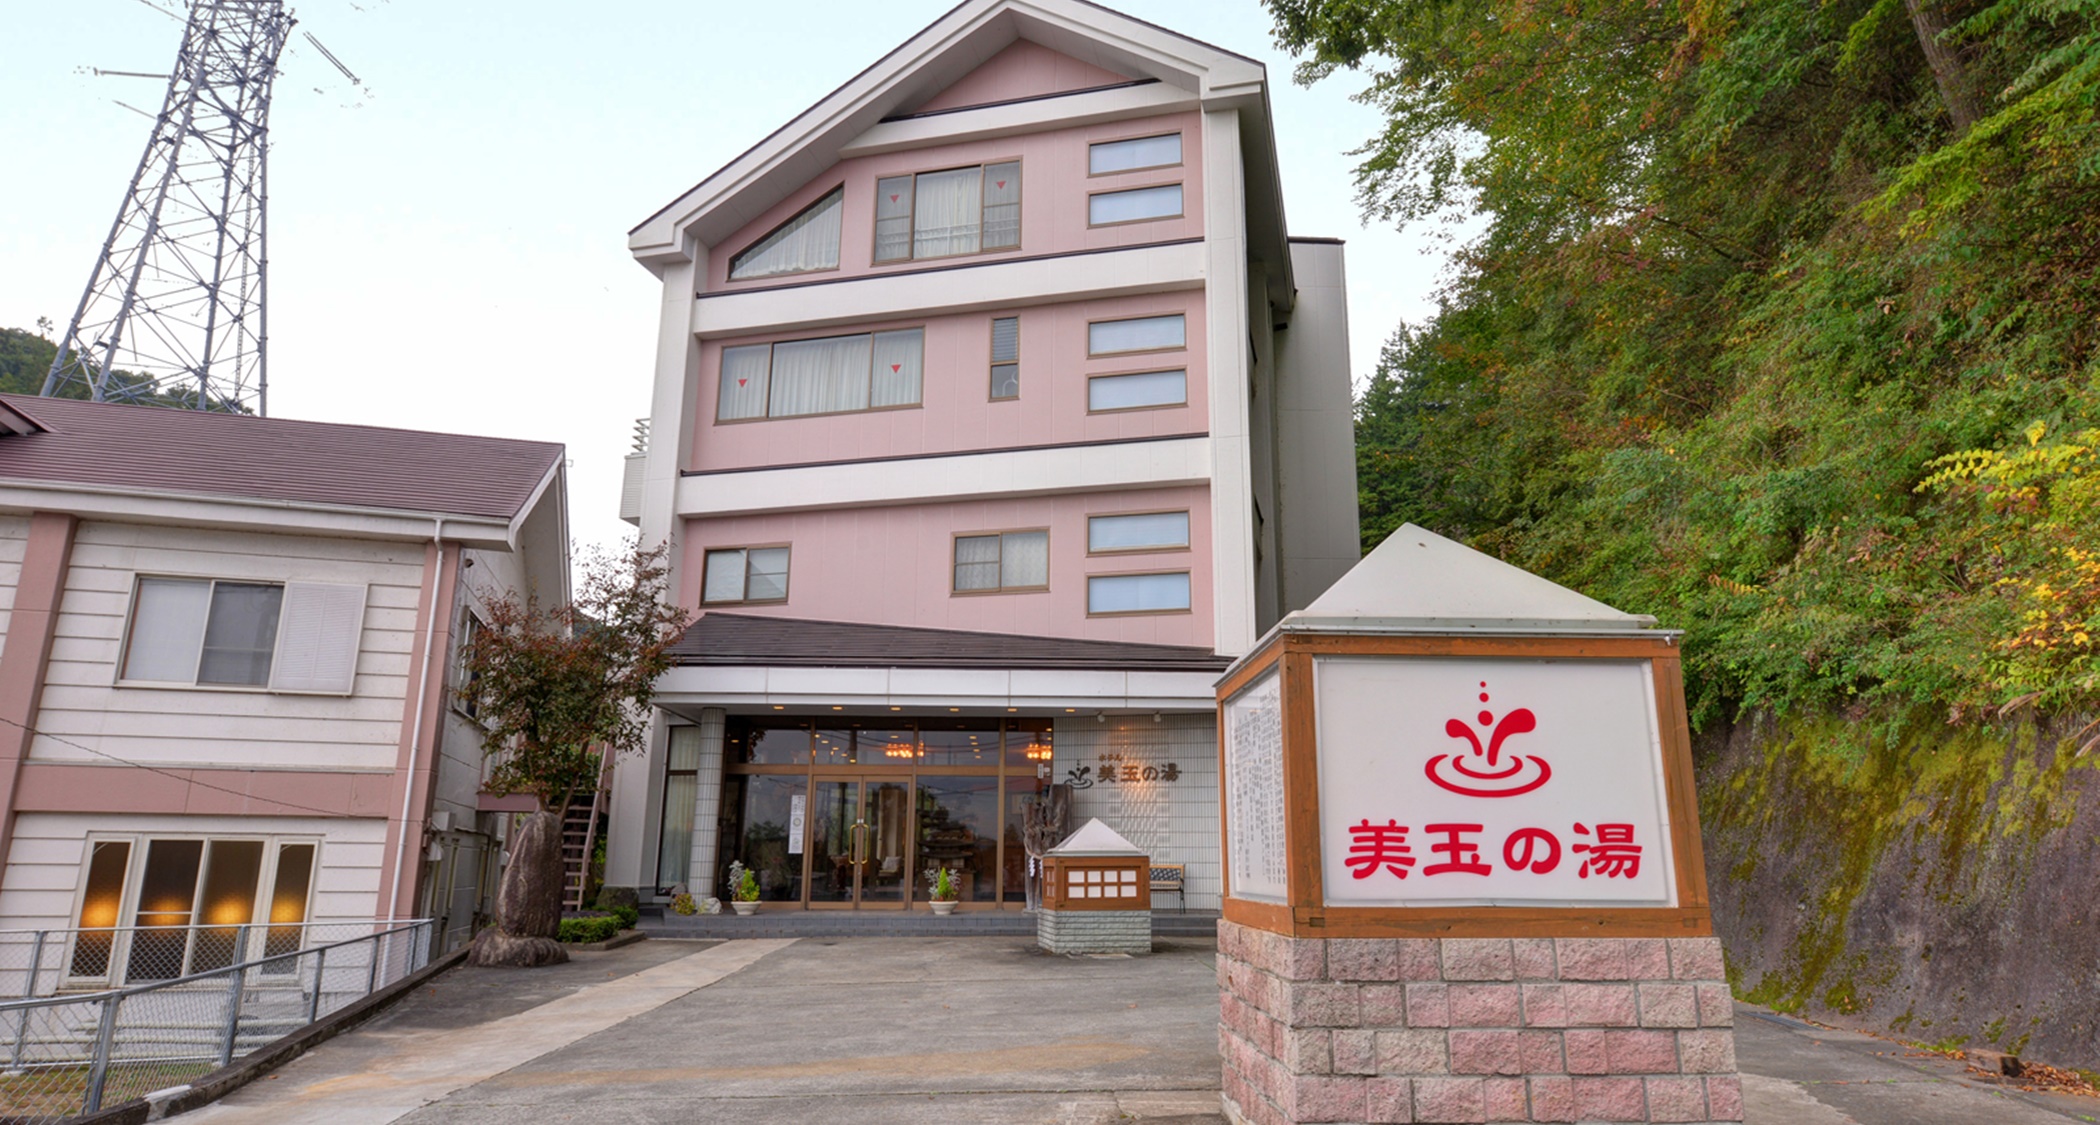 Koisago Onsen Hotel Mitamanoyu